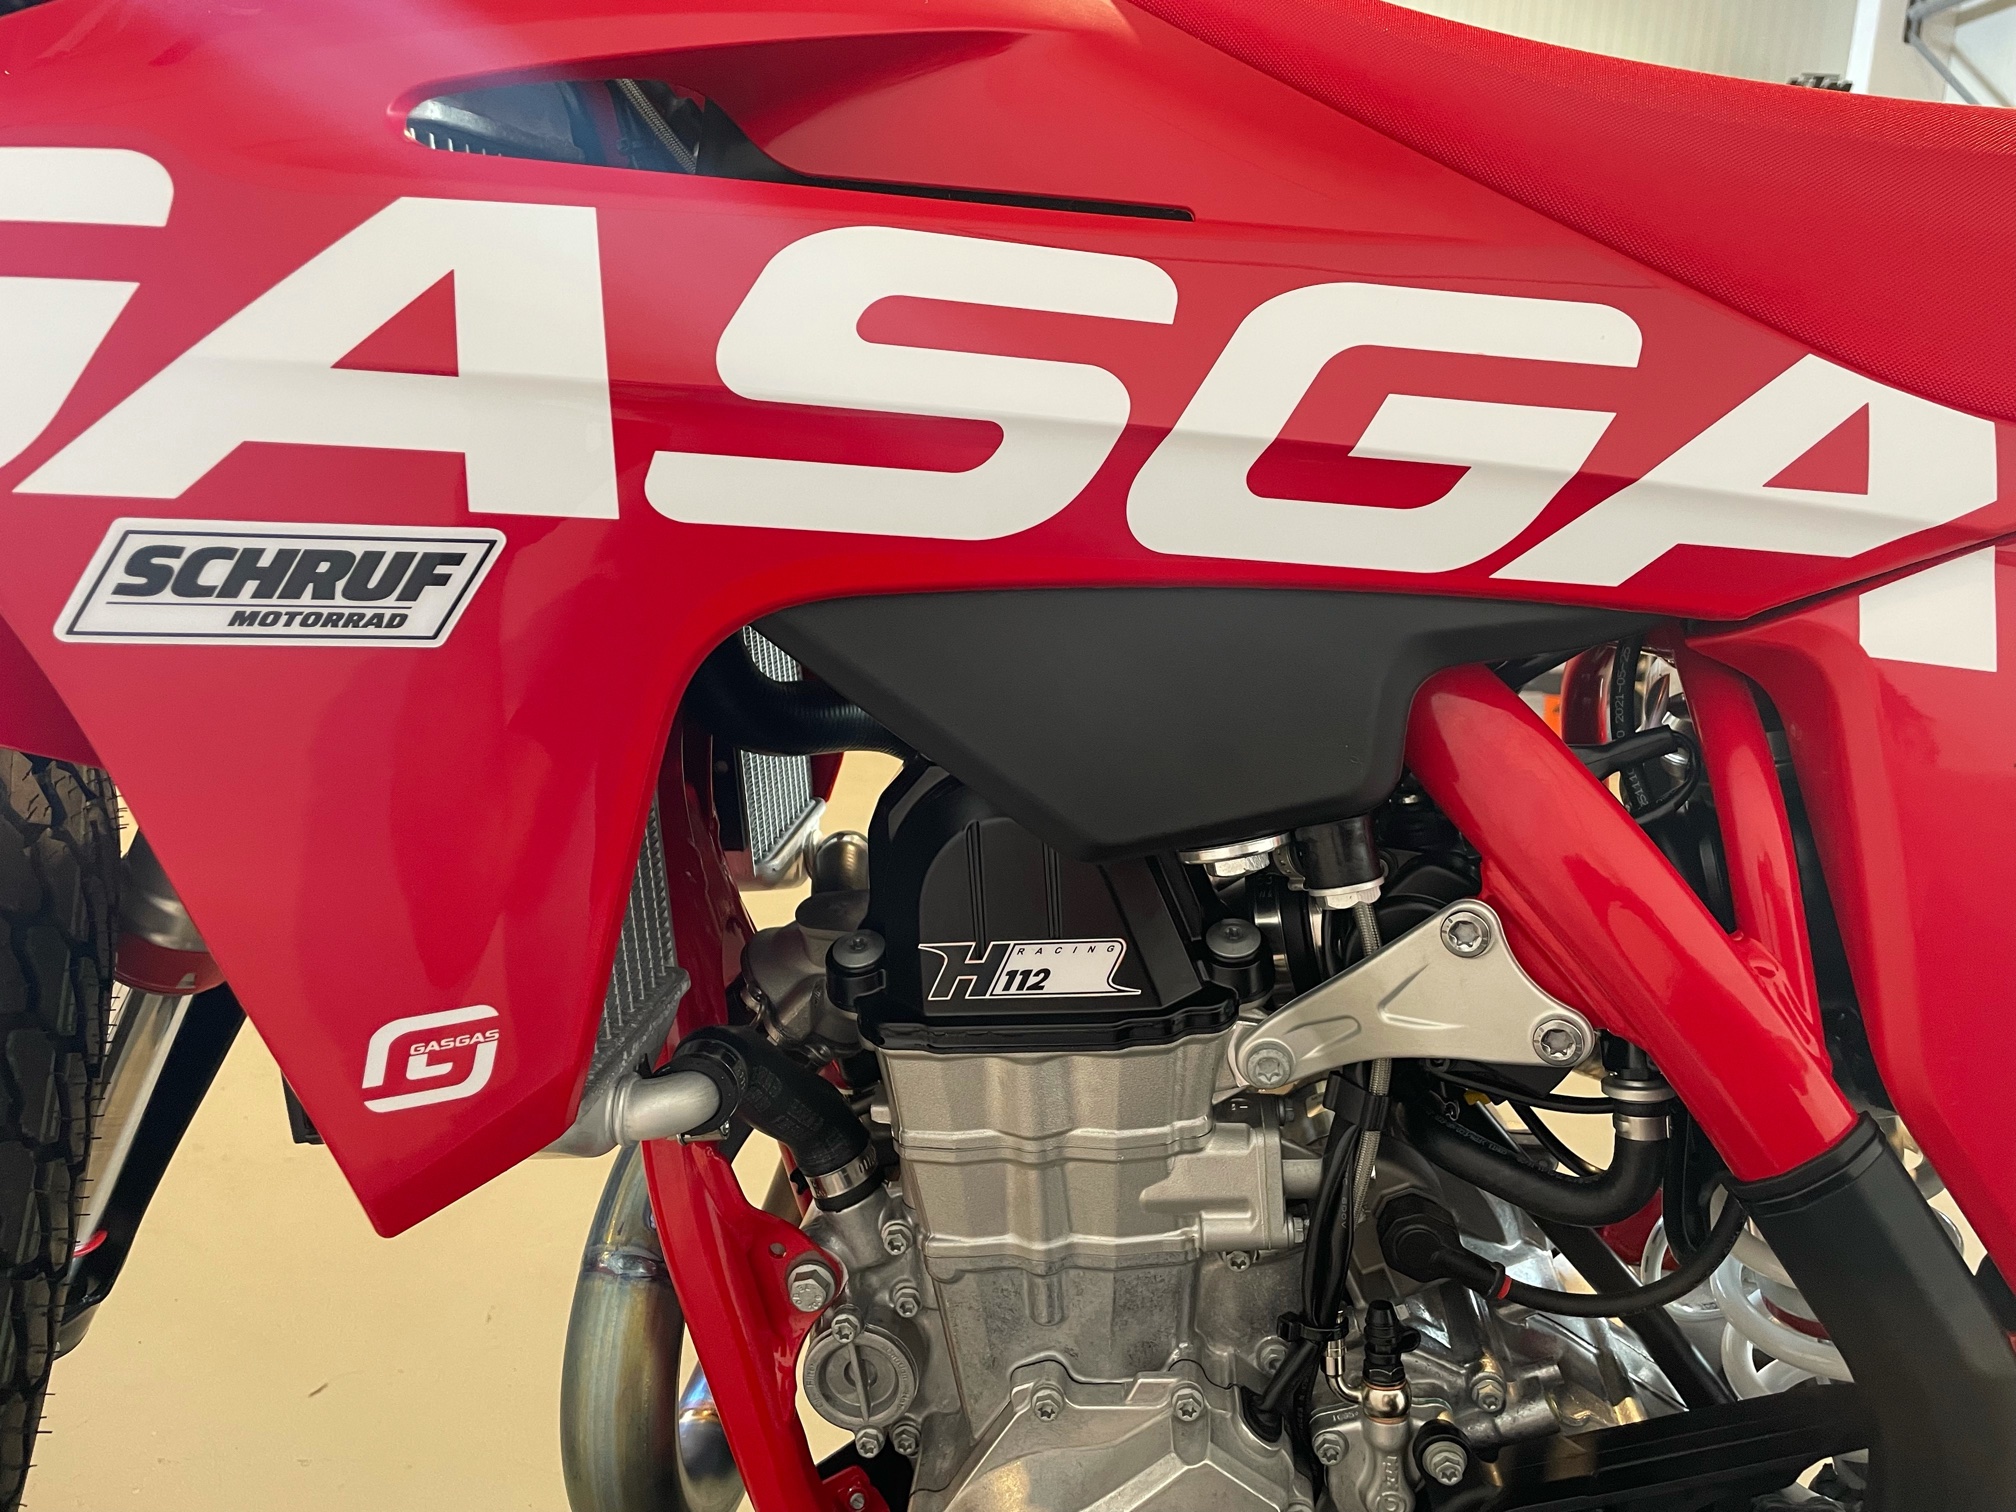 GASGAS 450 Flat Track Edition - SCHRUF Motorrad 2022